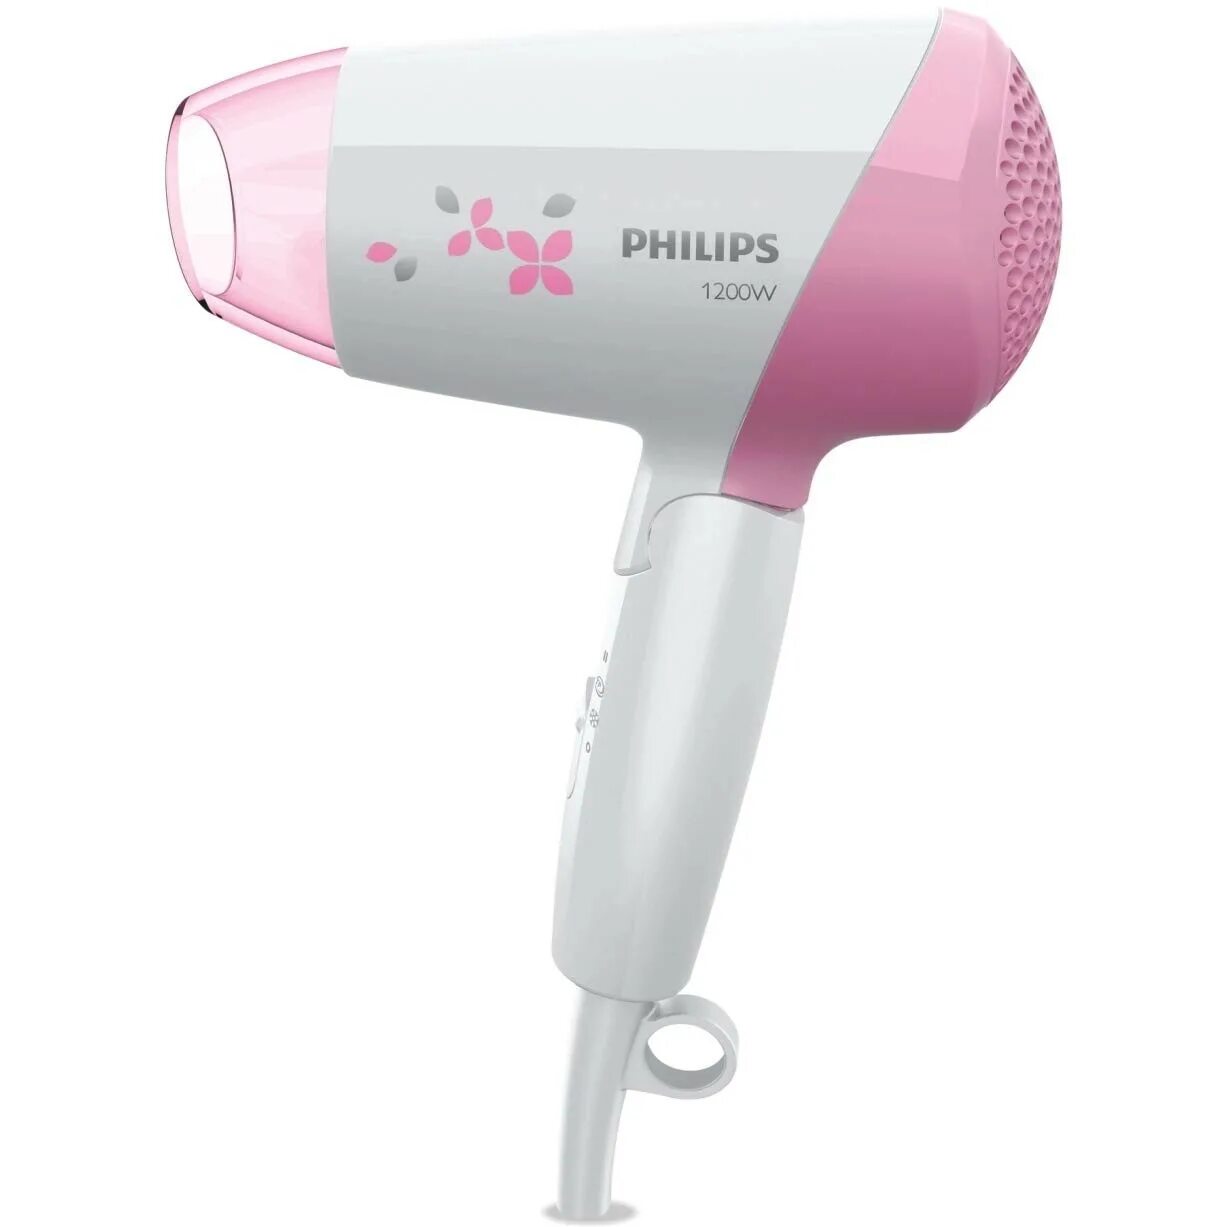 Фен Филипс hair Dryer. Philips hair Dryer 3000 фен. Фен Филипс розовый. Philips hair Dryer 3000 powerful Drying.